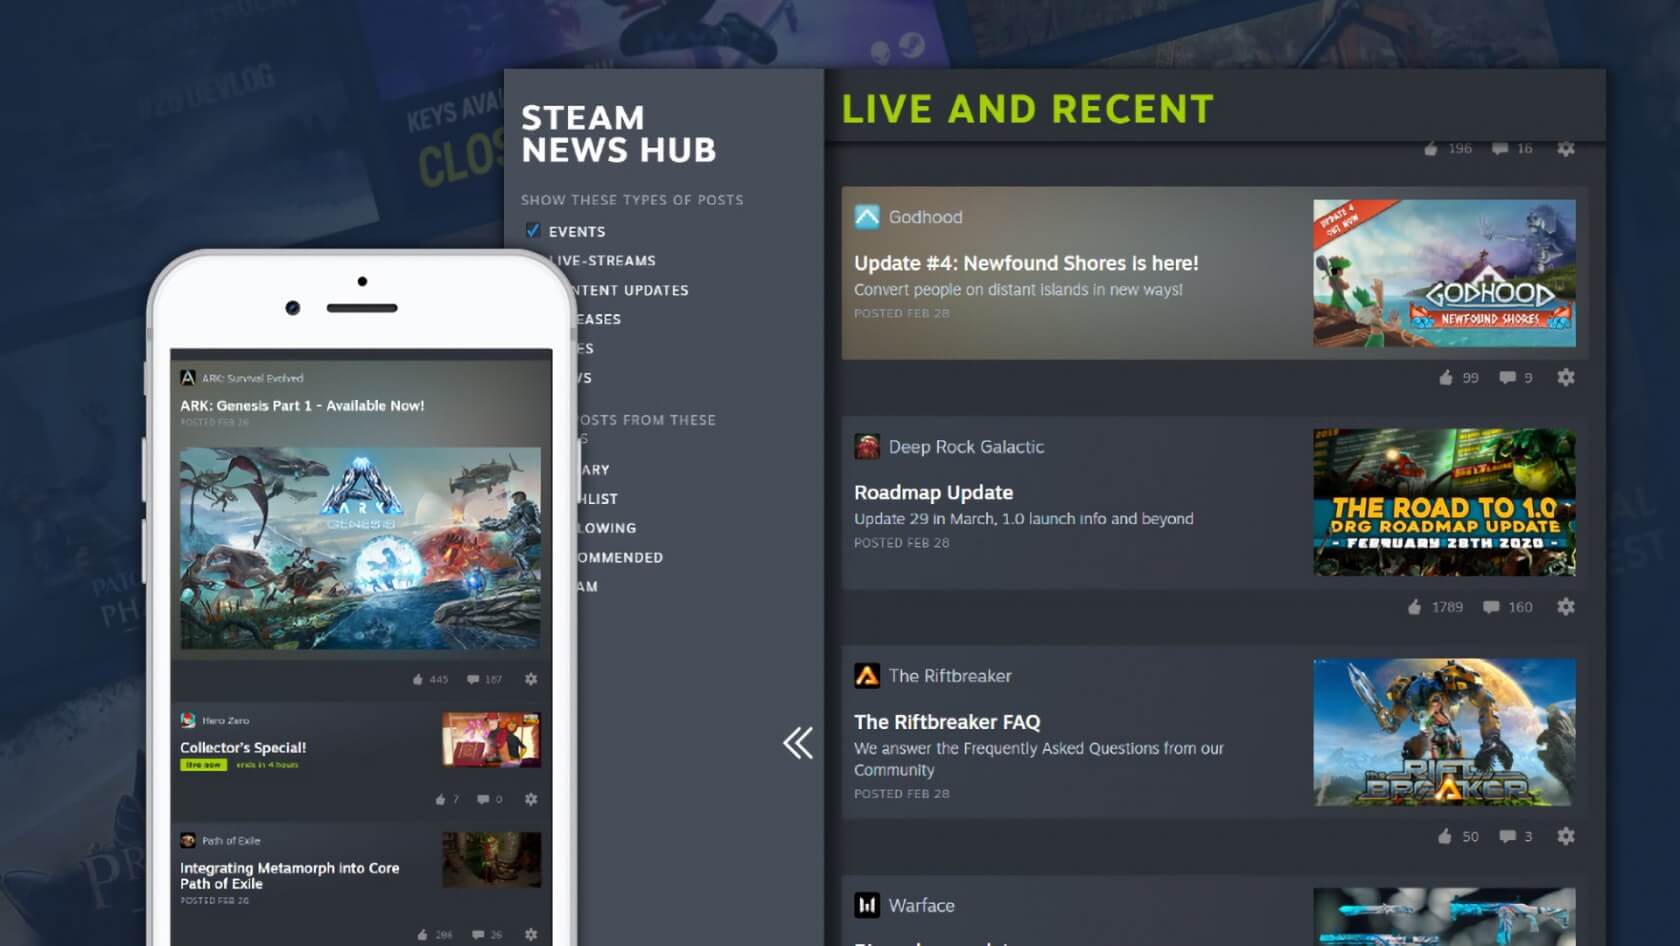 Steam News Hub